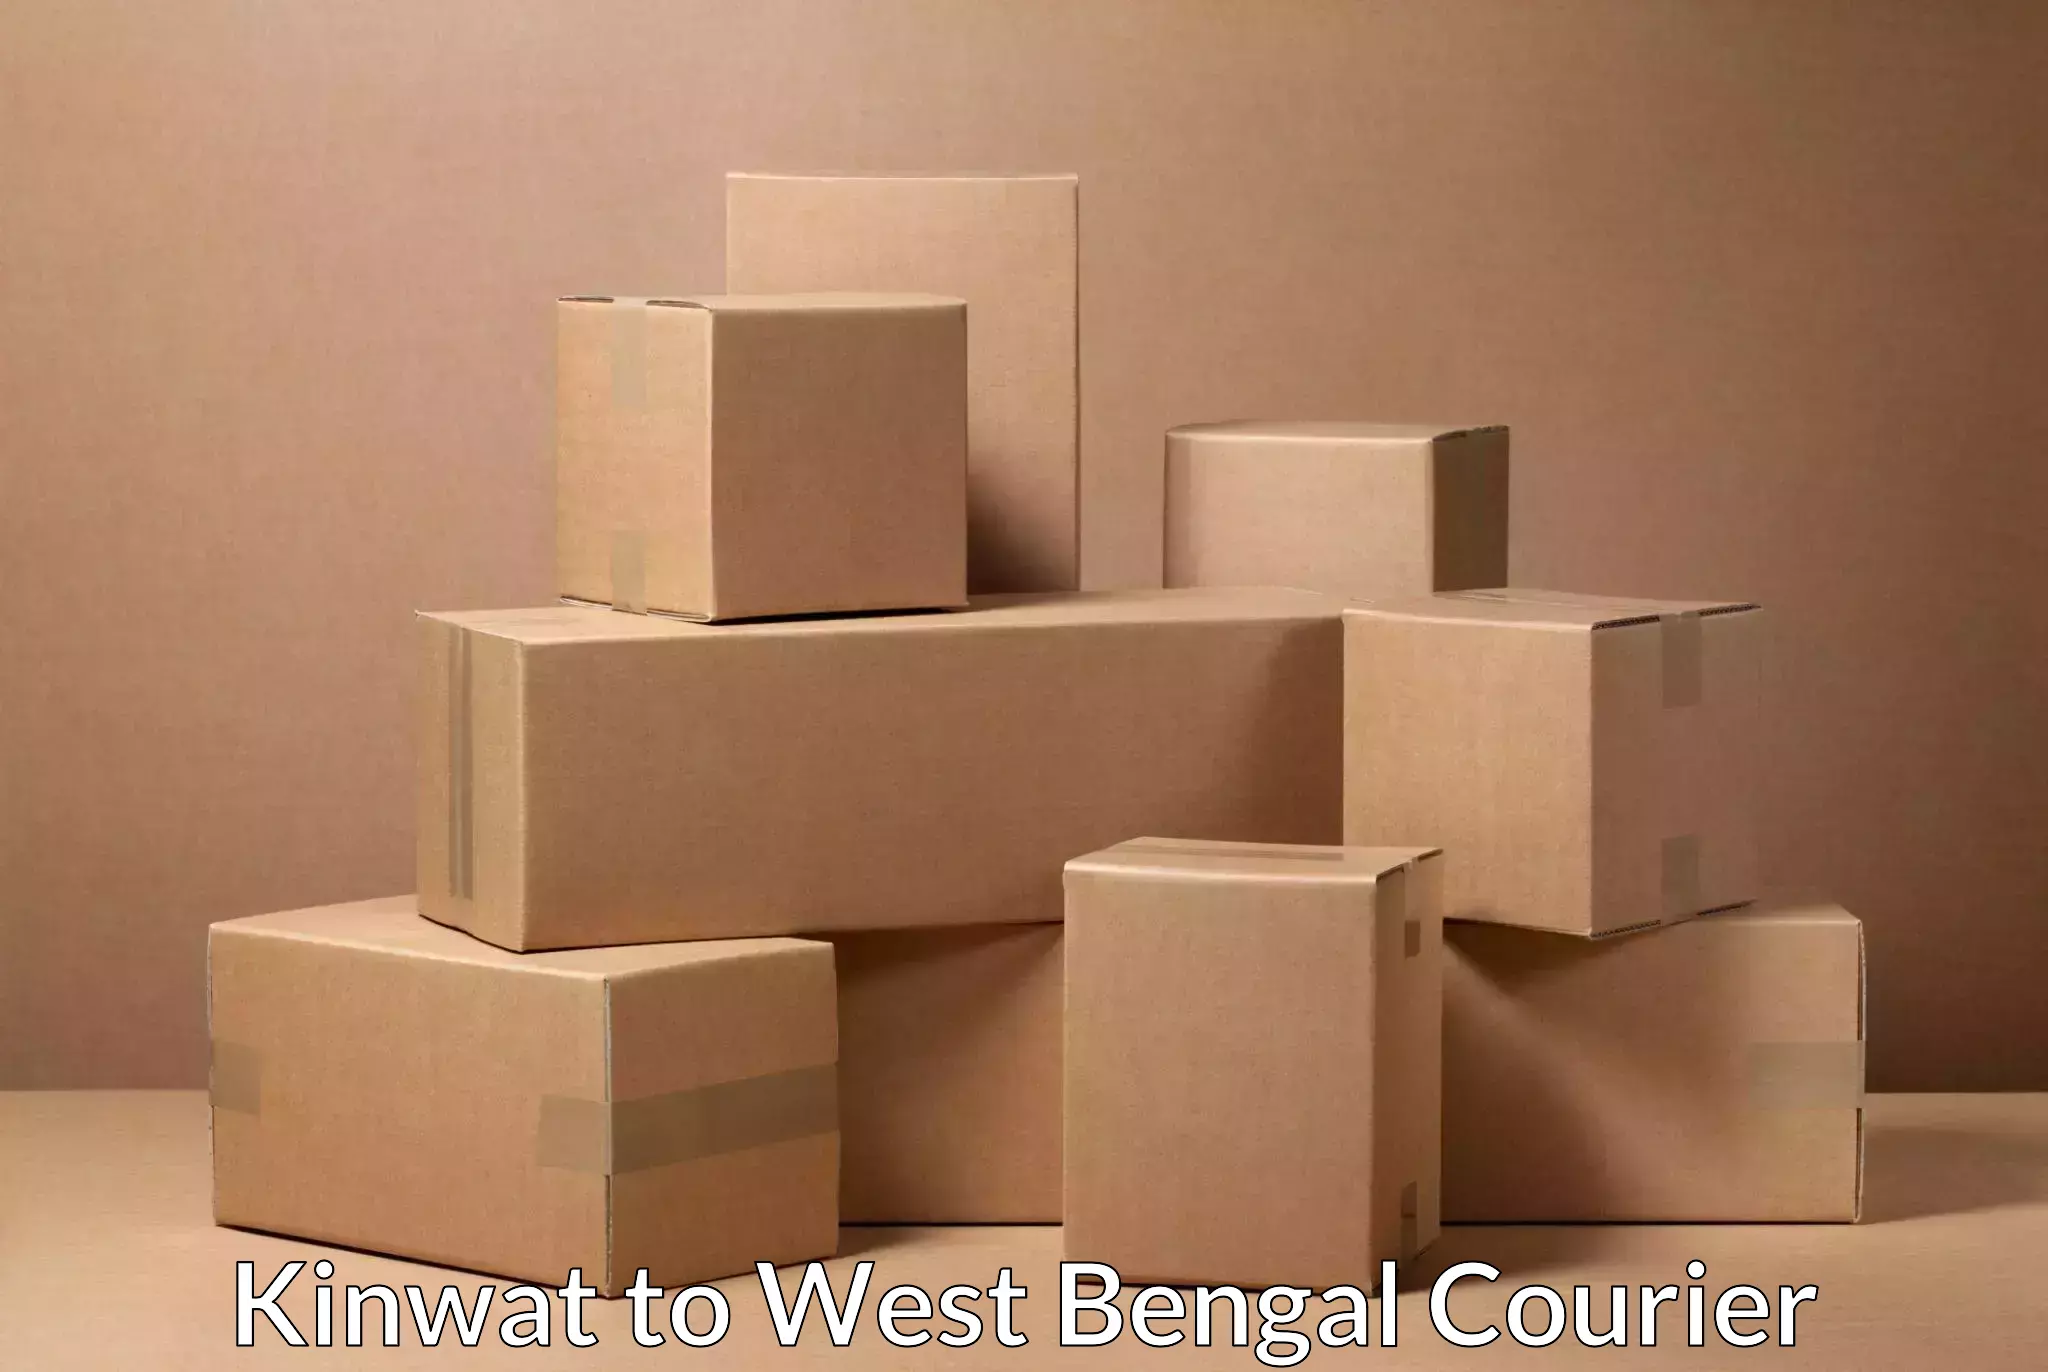 Digital courier platforms Kinwat to West Bengal